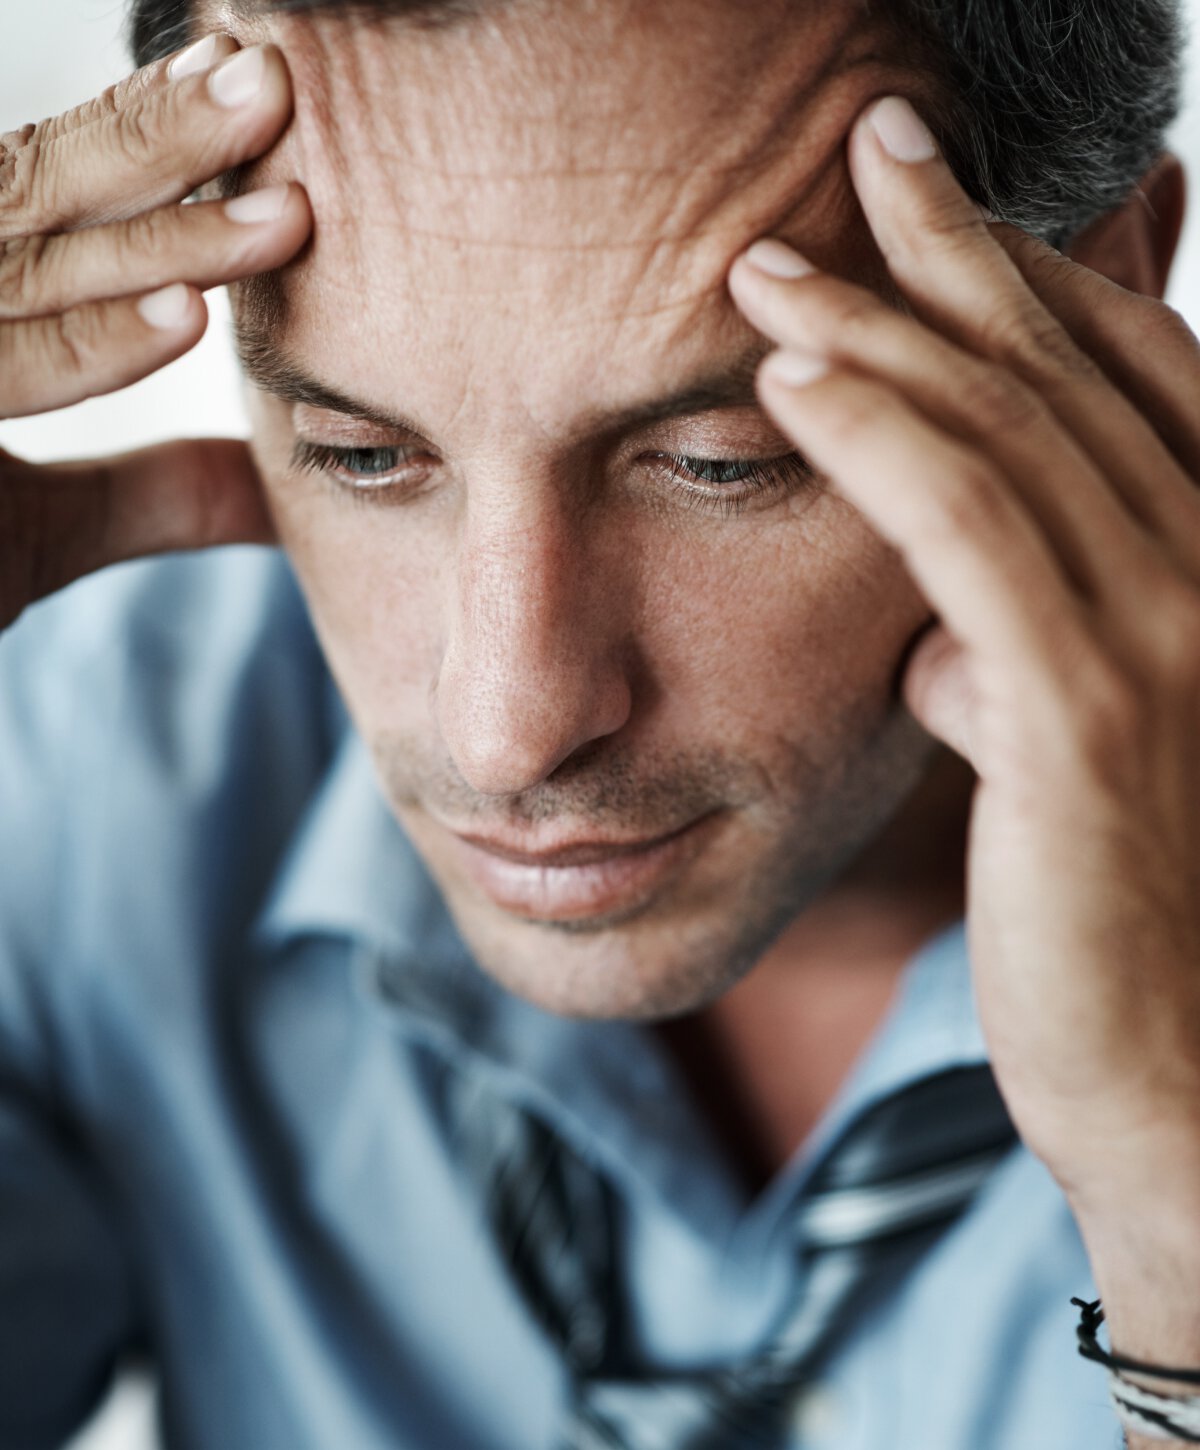 migraine treatment model relieved